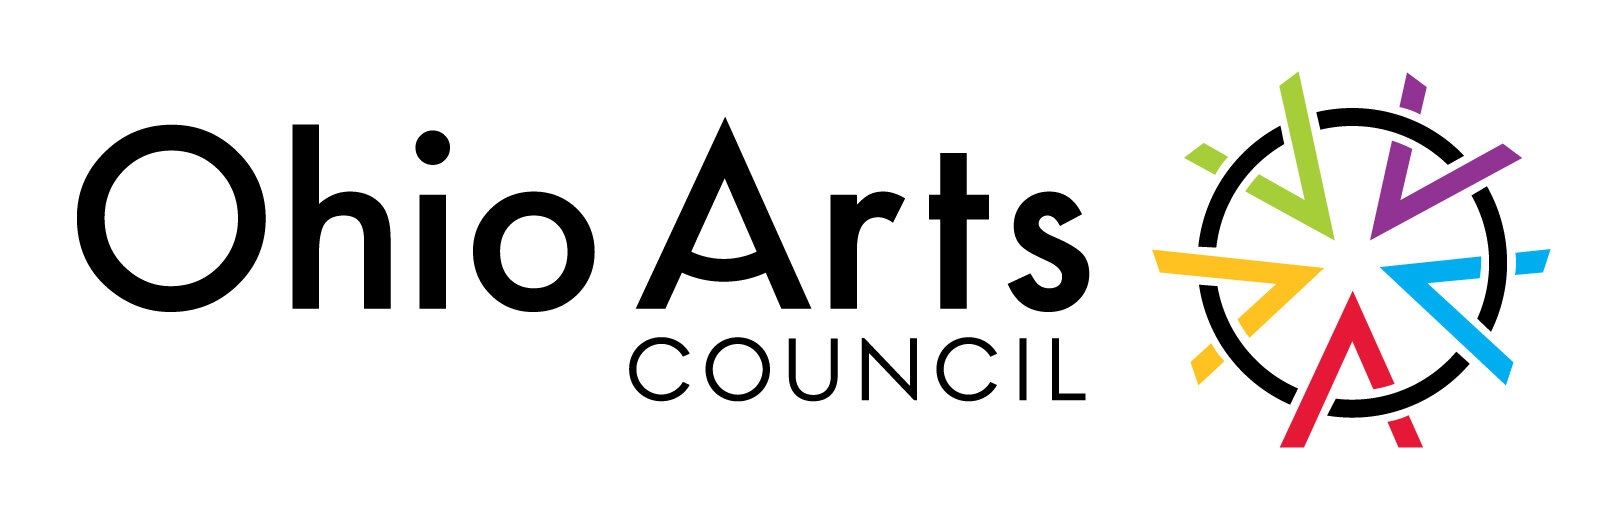 MEMBER ohio arts council.jpg